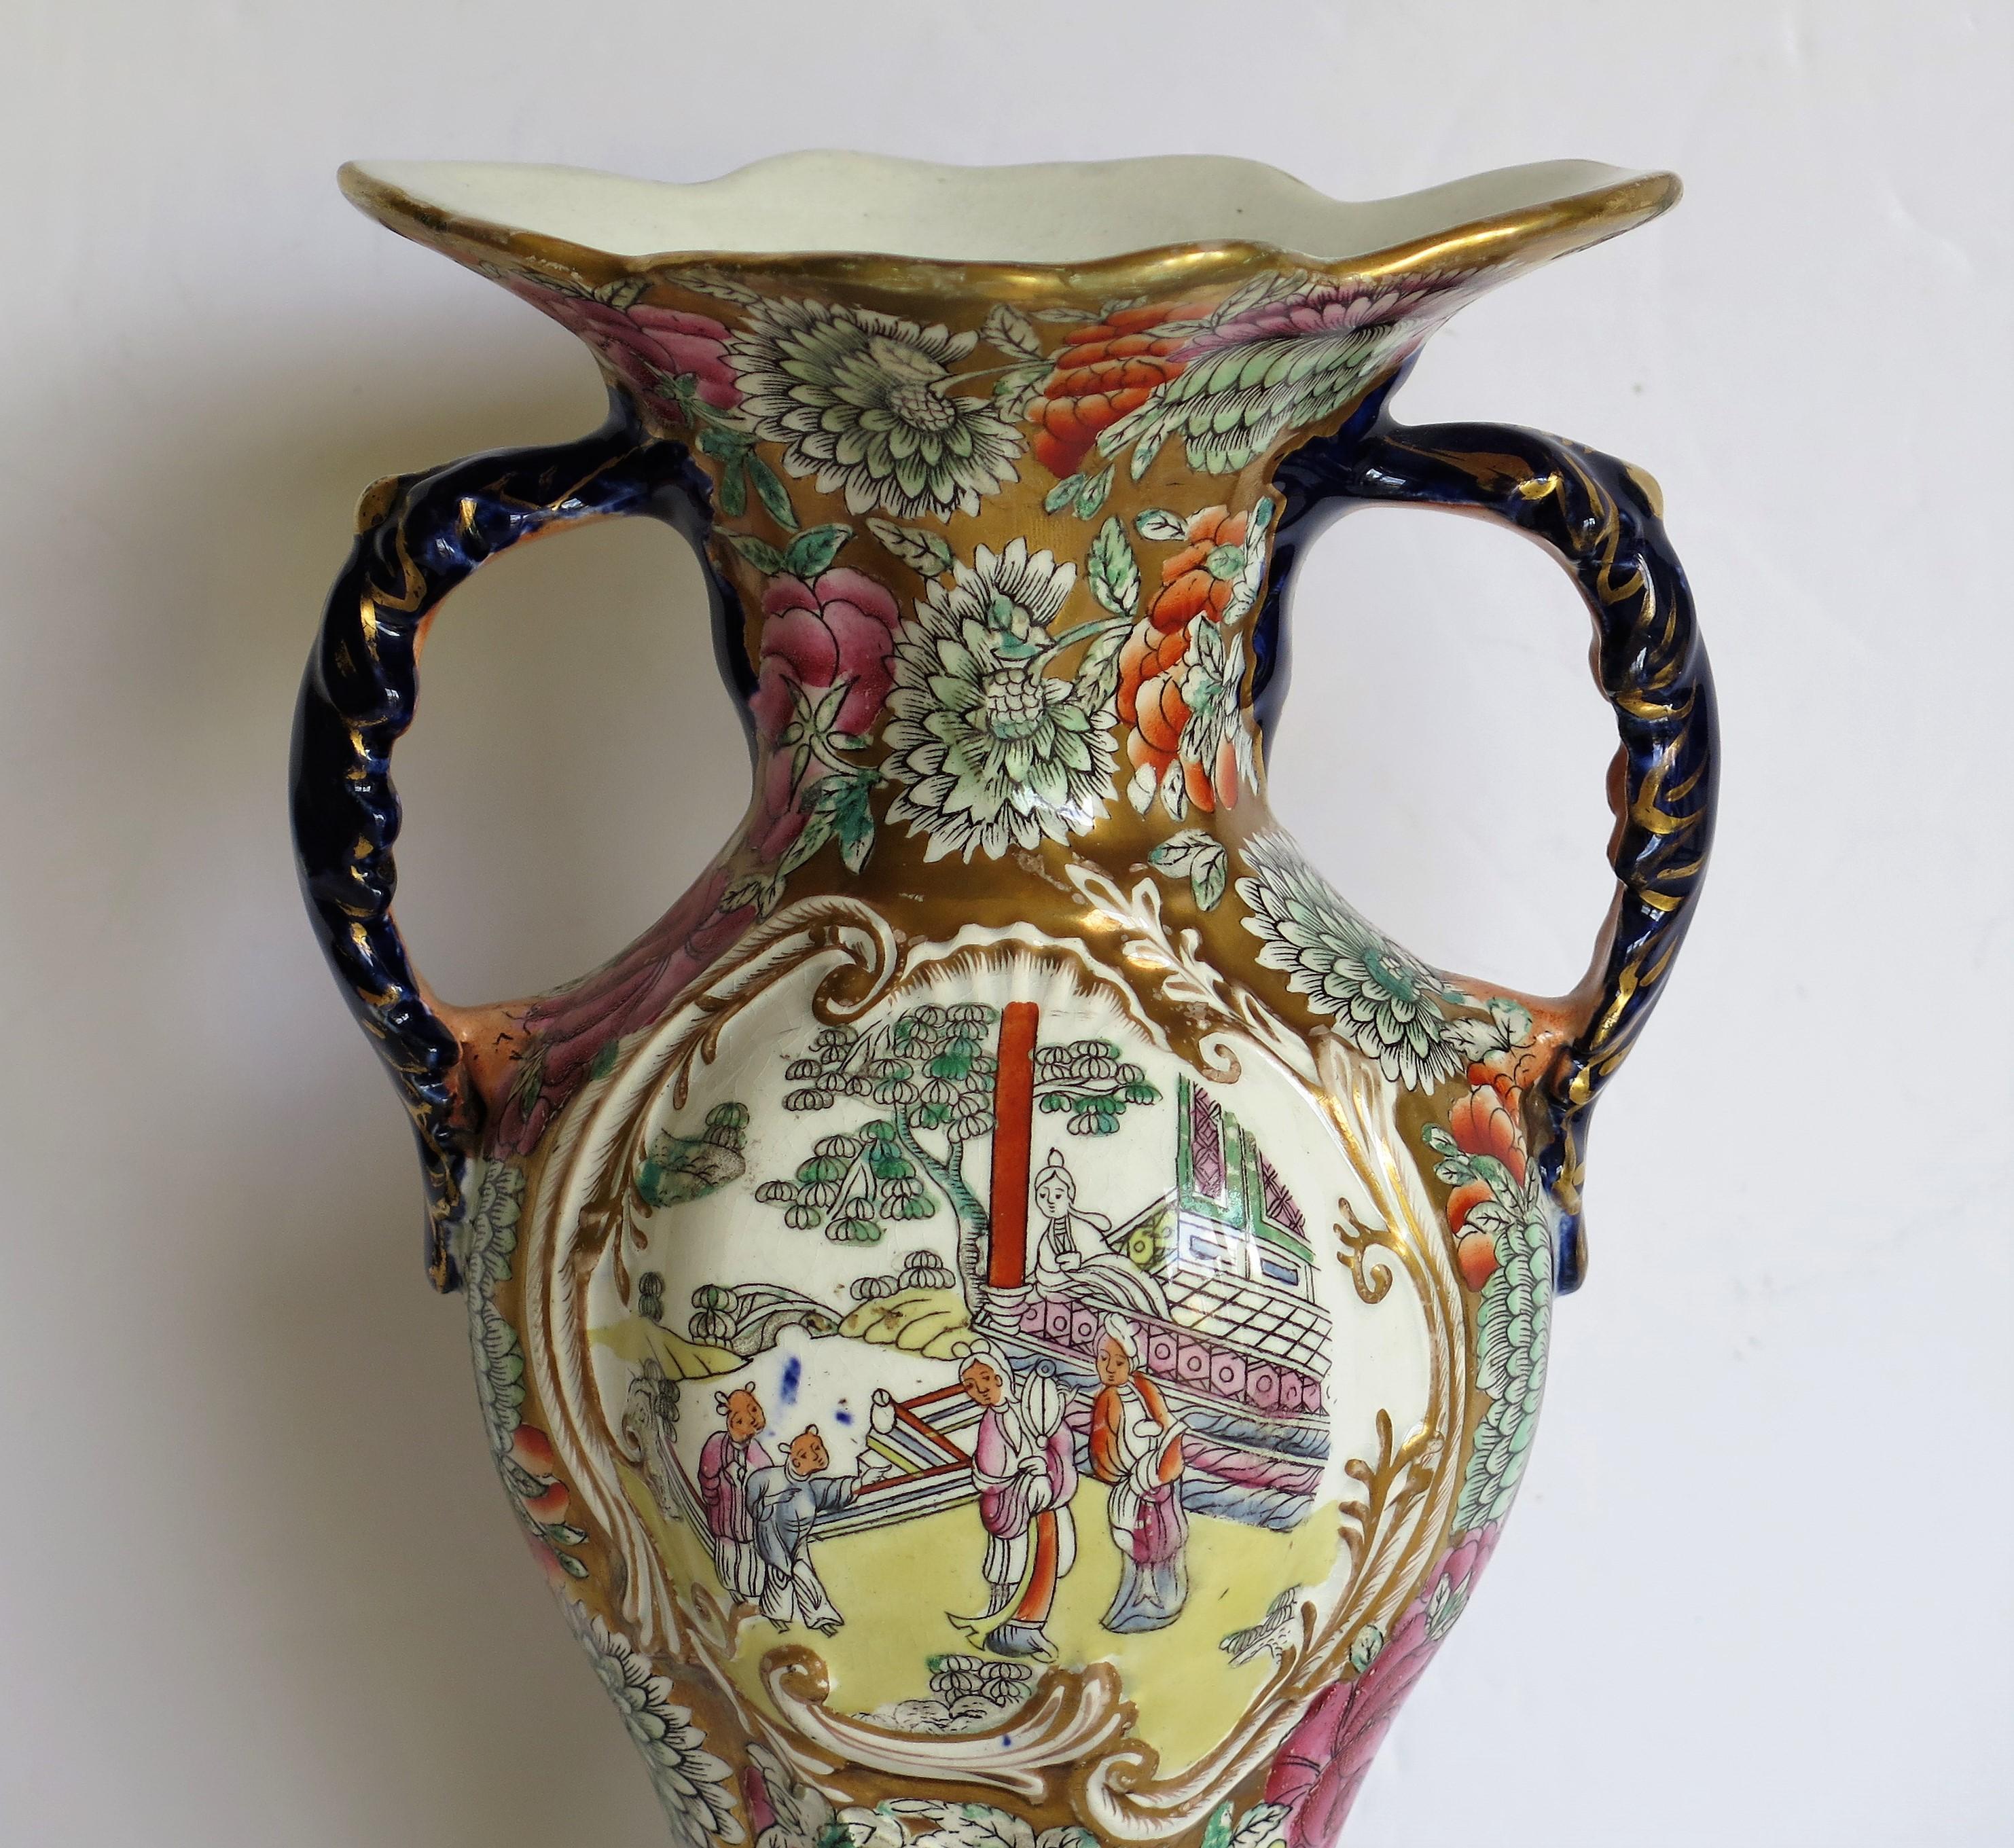 19th Century Mason's Ironstone Twin Handled Vase in Chinese Visitors Pattern, circa 1825